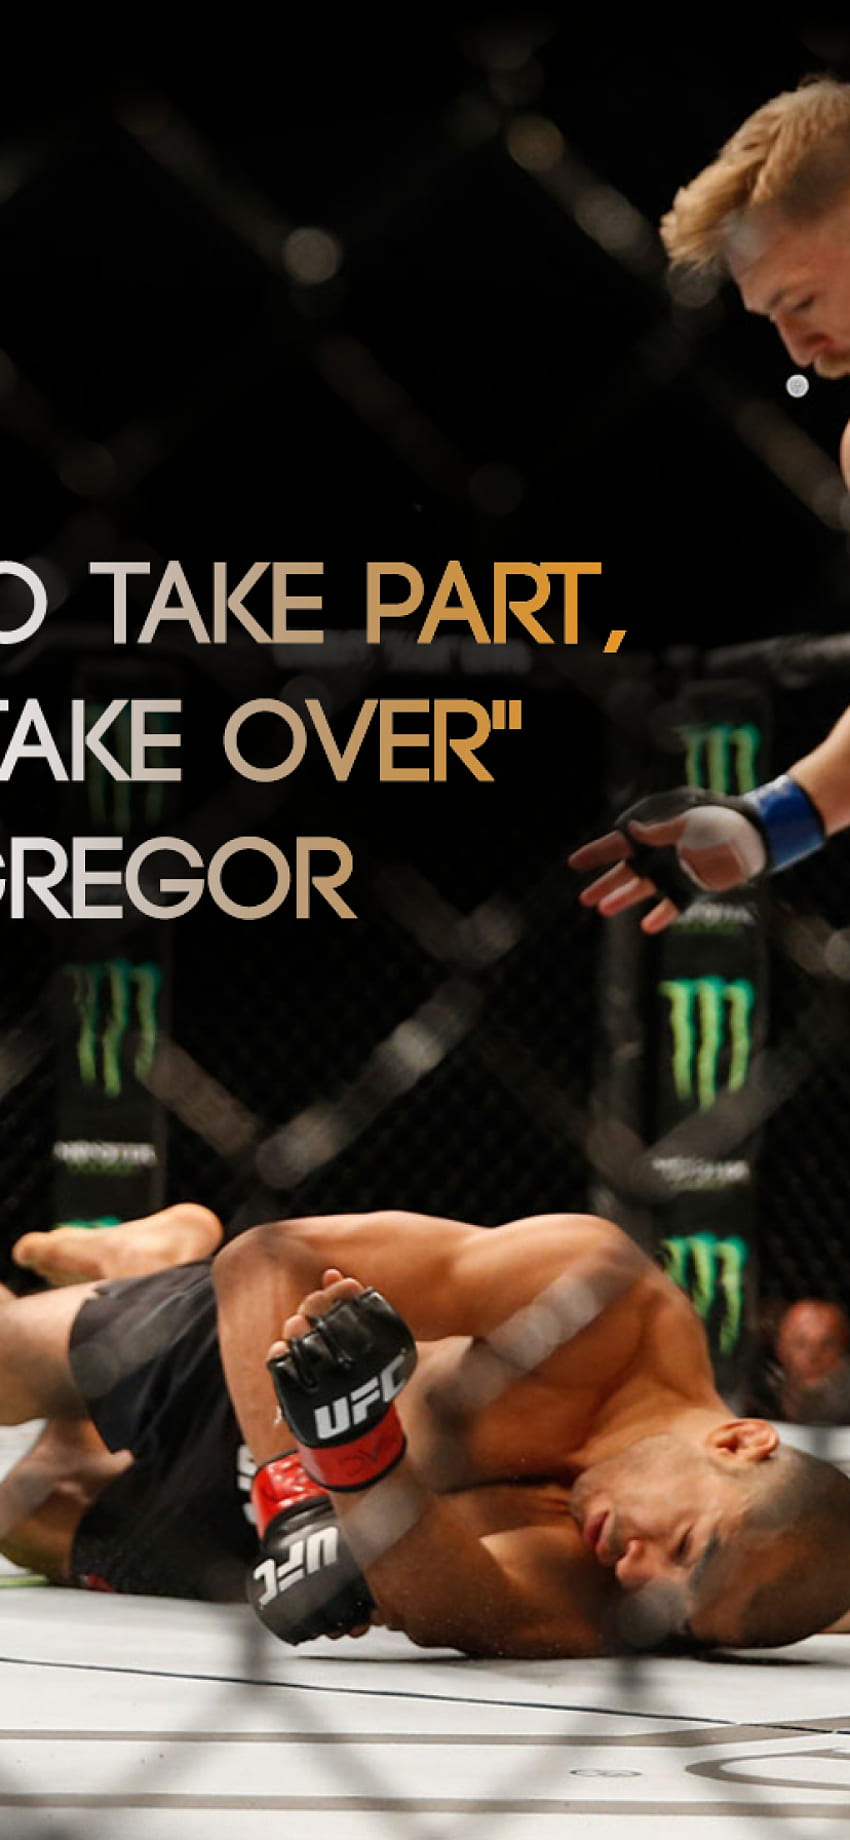 Wallpaper UFC, Conor McGregor, Conor McGregor images for desktop, section  спорт - download